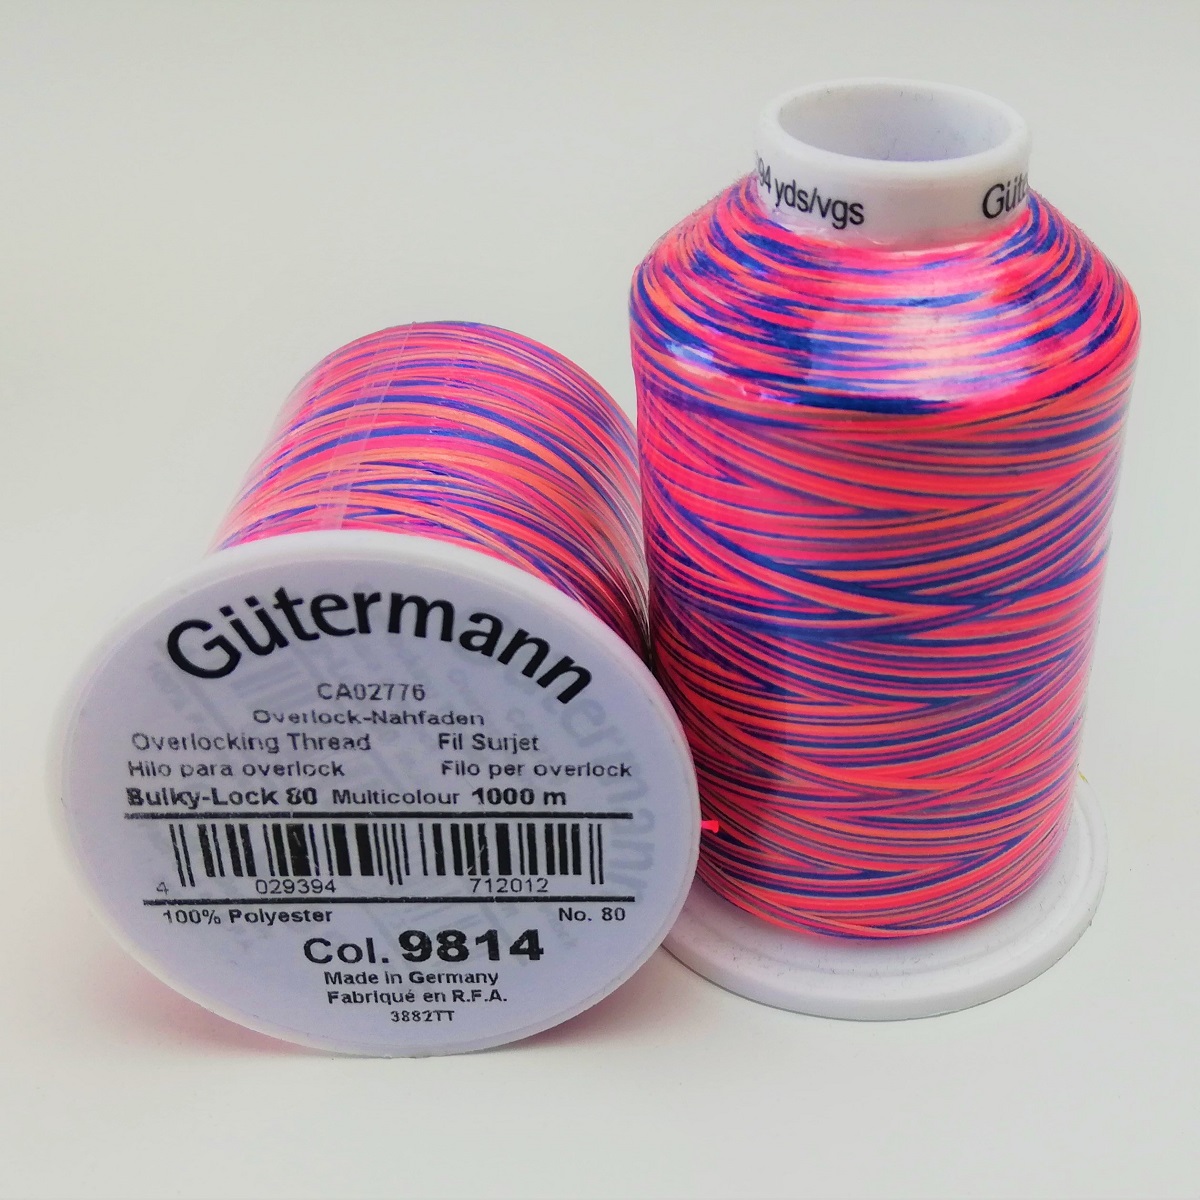 Gütermann Bauschgarn Bulky-Lock 80 Multicolor "pink jeans" 9814, 1000m